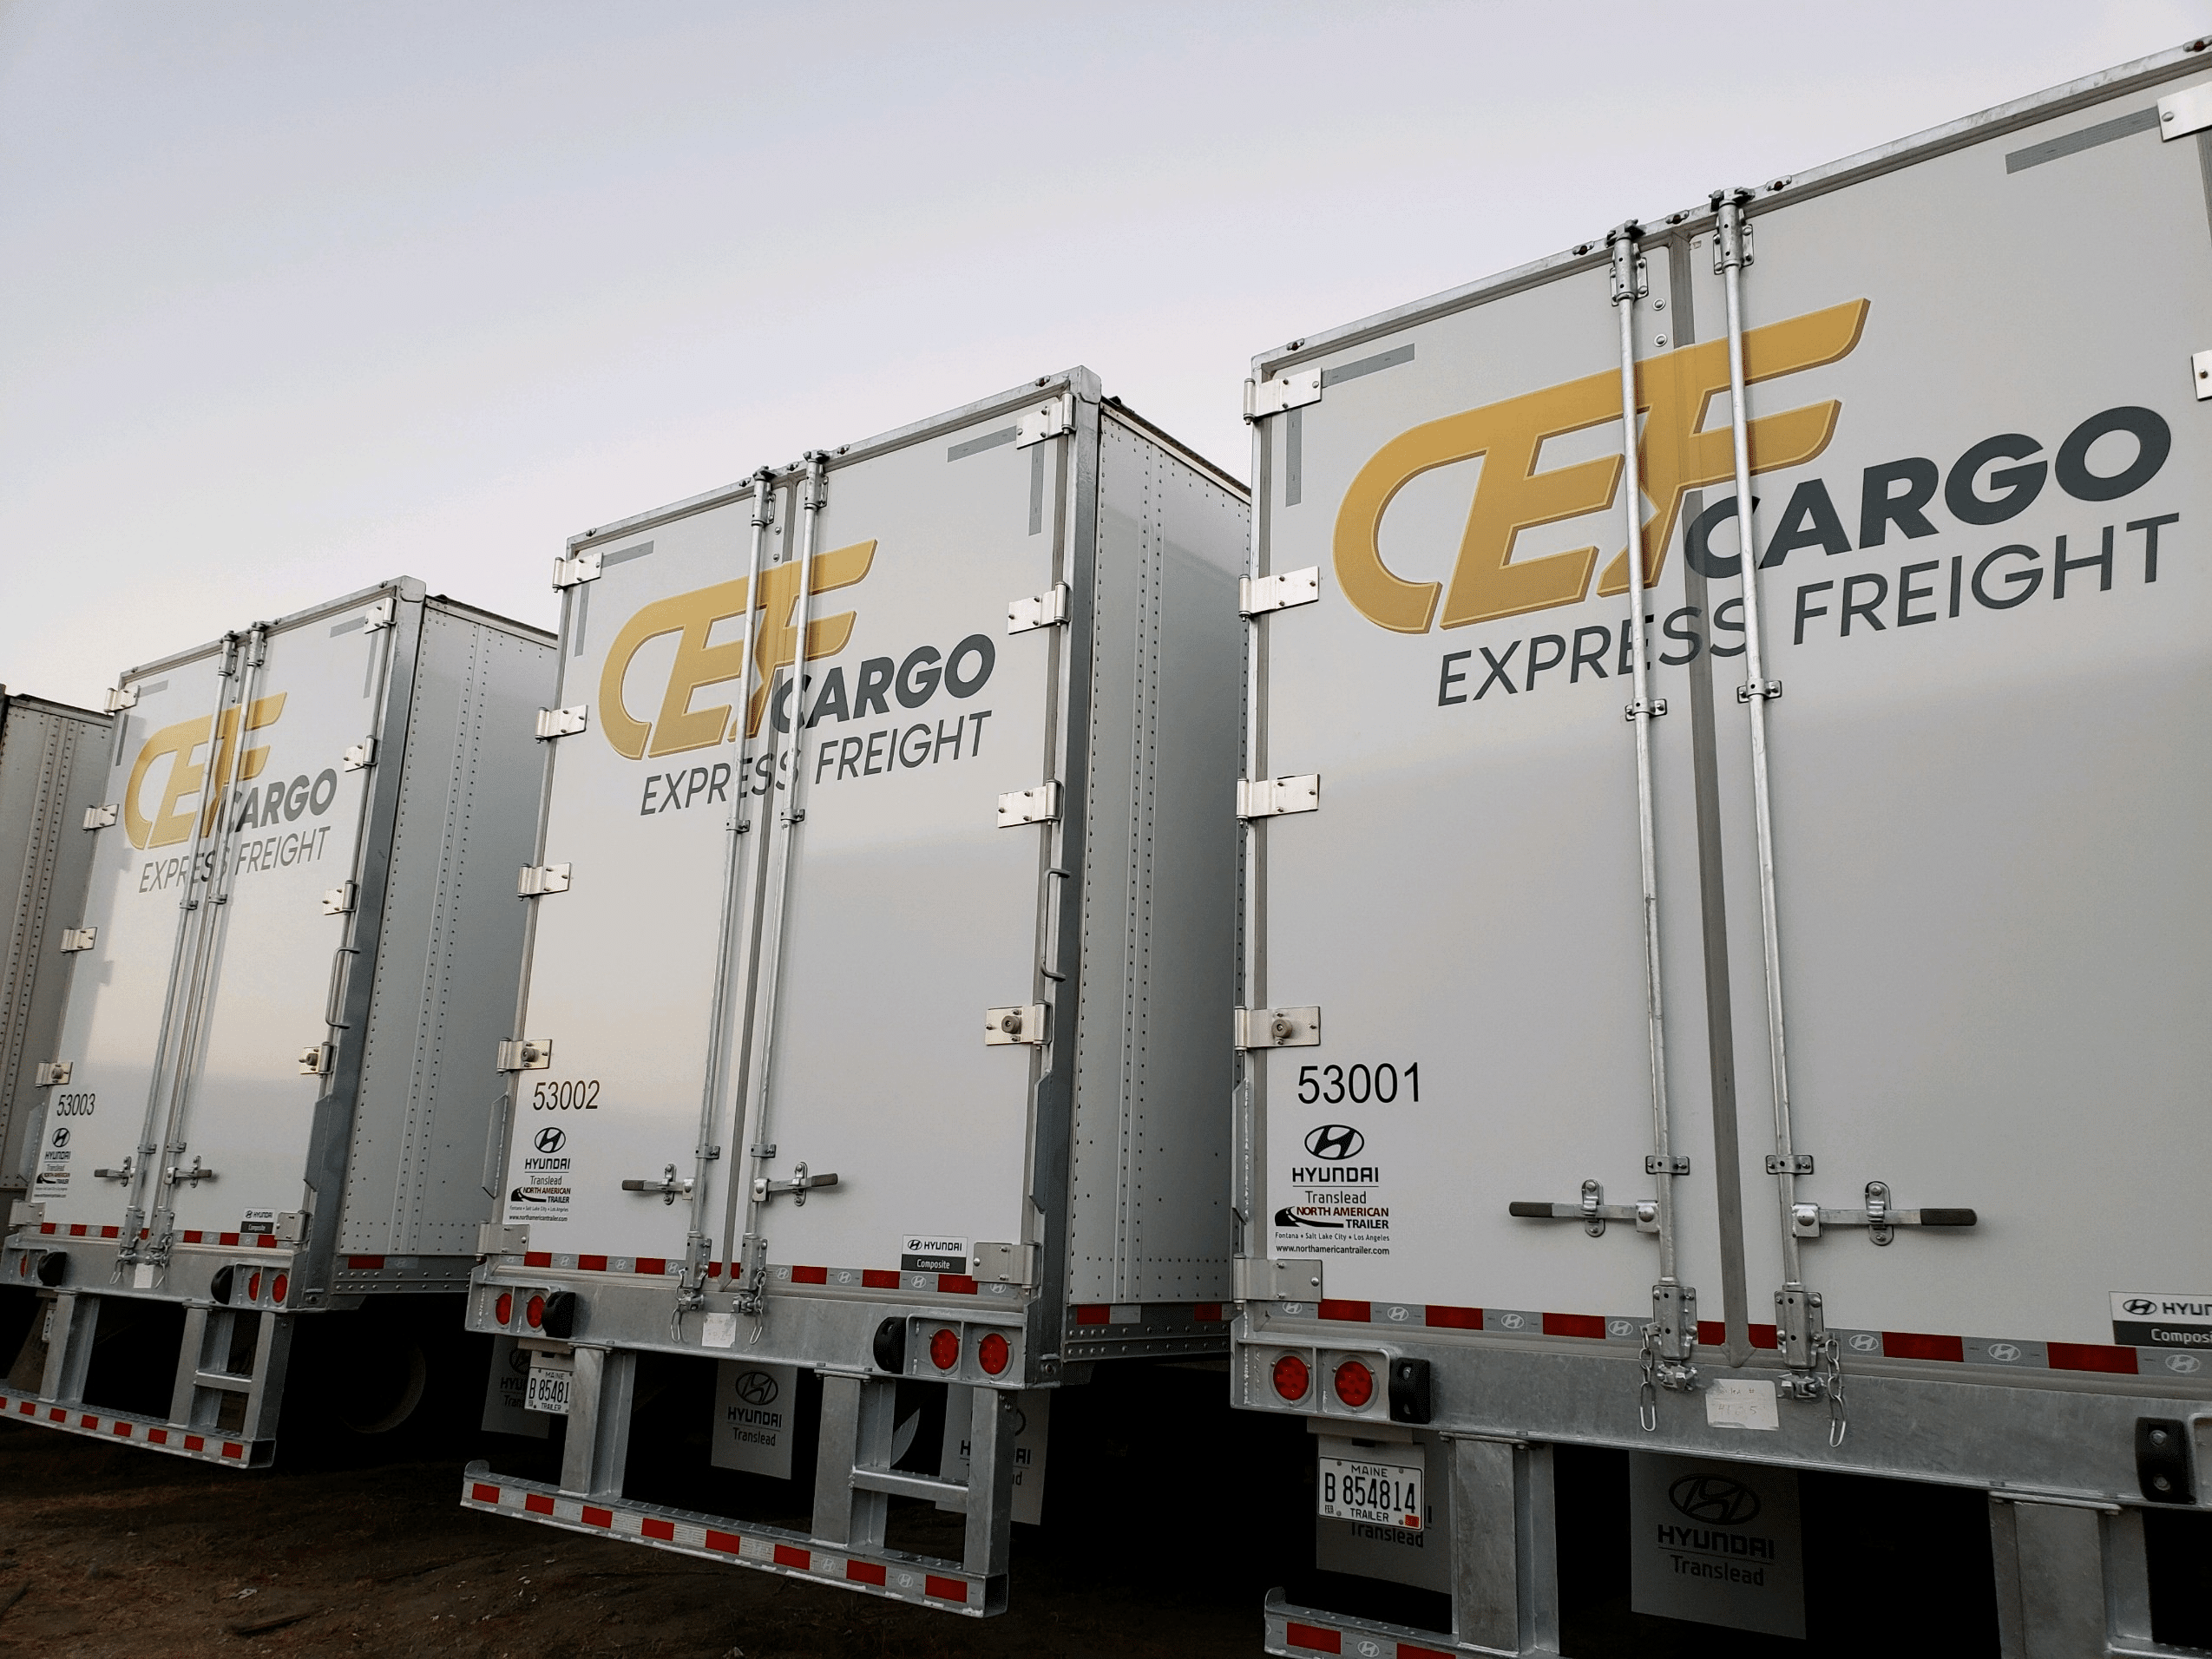 Full Truckload Freight - Cargo Express Freight